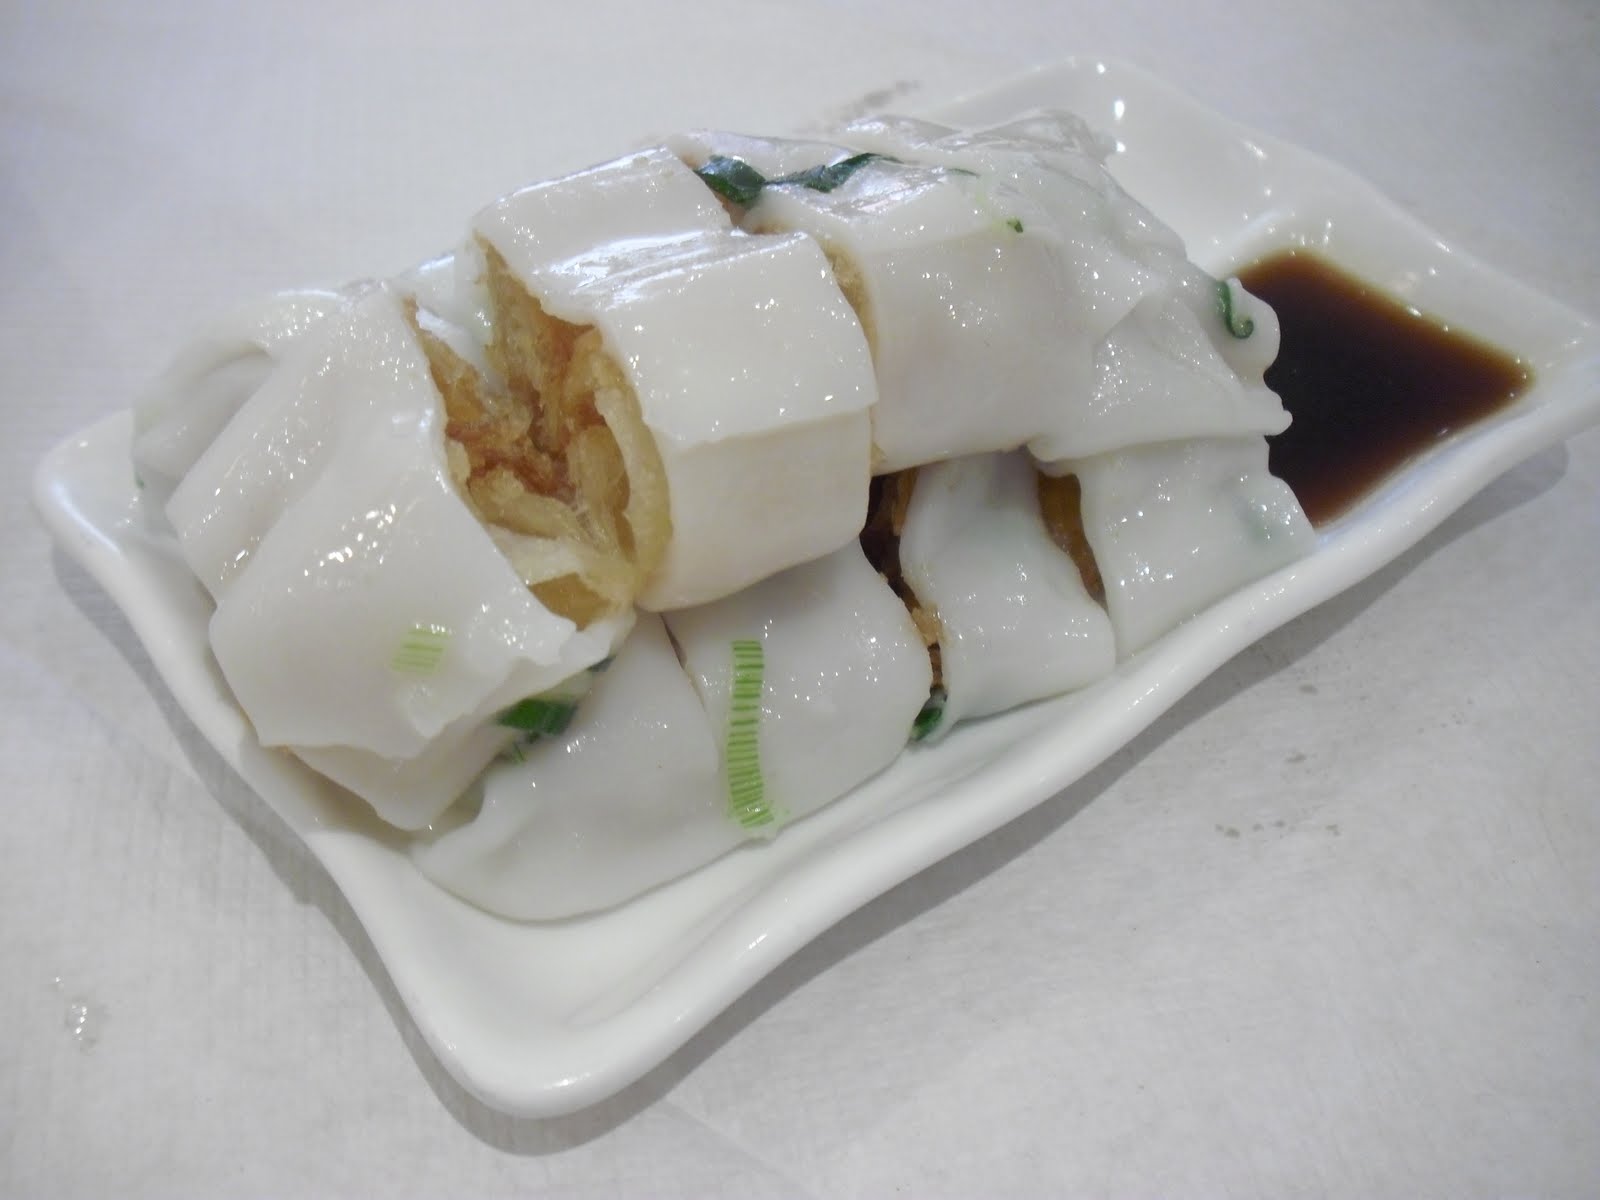 Hong Kong Steamed Rice Rolls with Prawns (Har Cheung Fun)